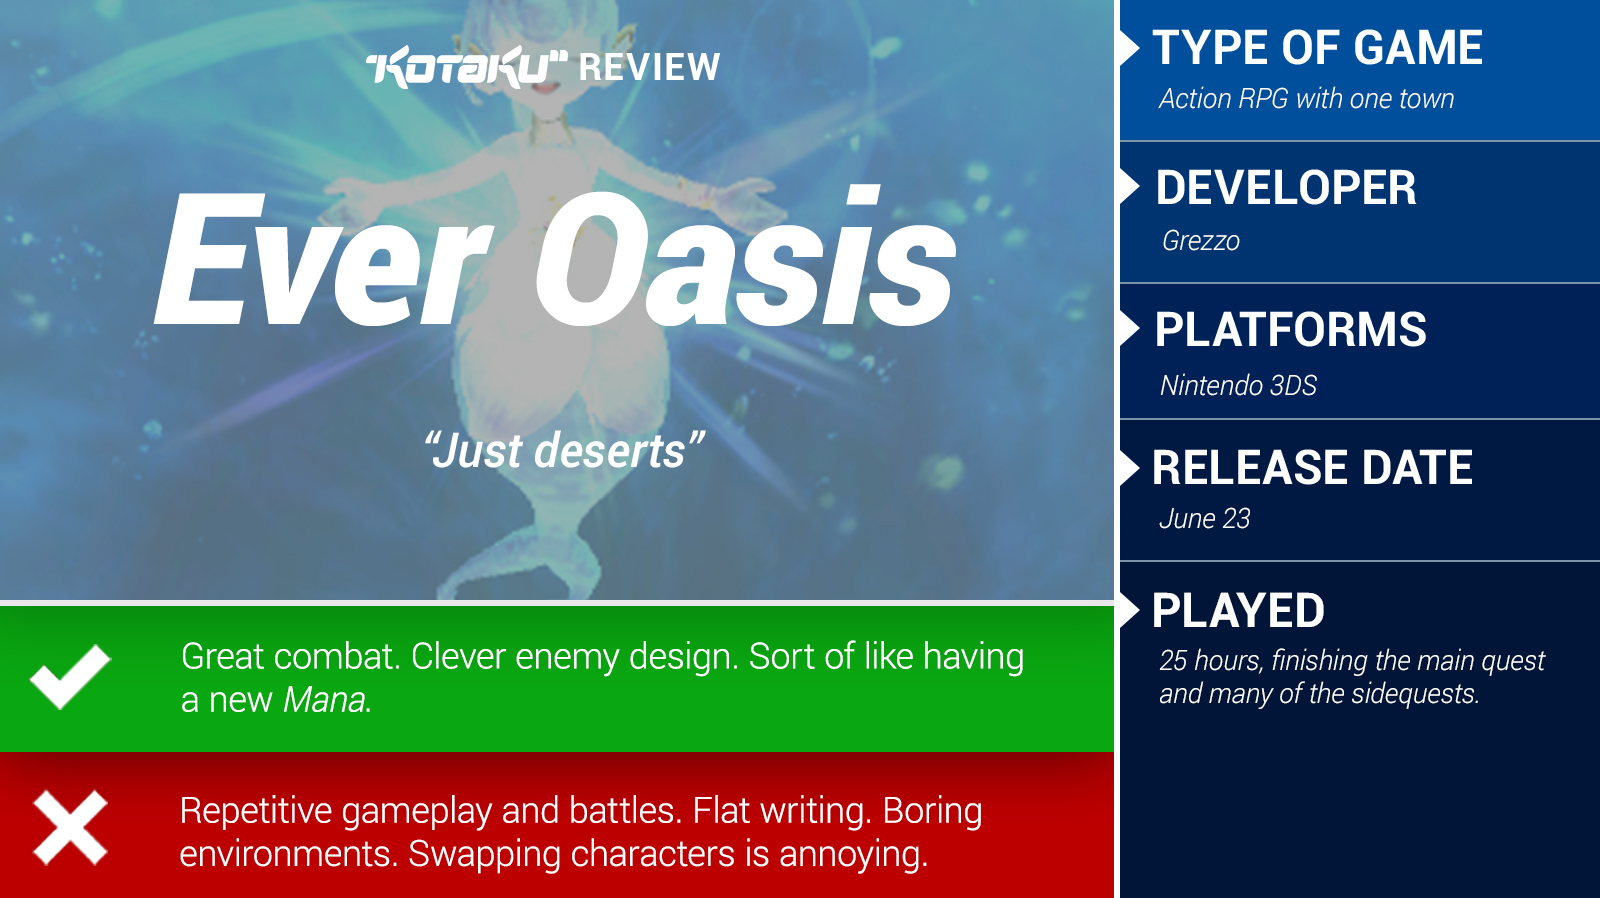 Ever Oasis: The Kotaku Review